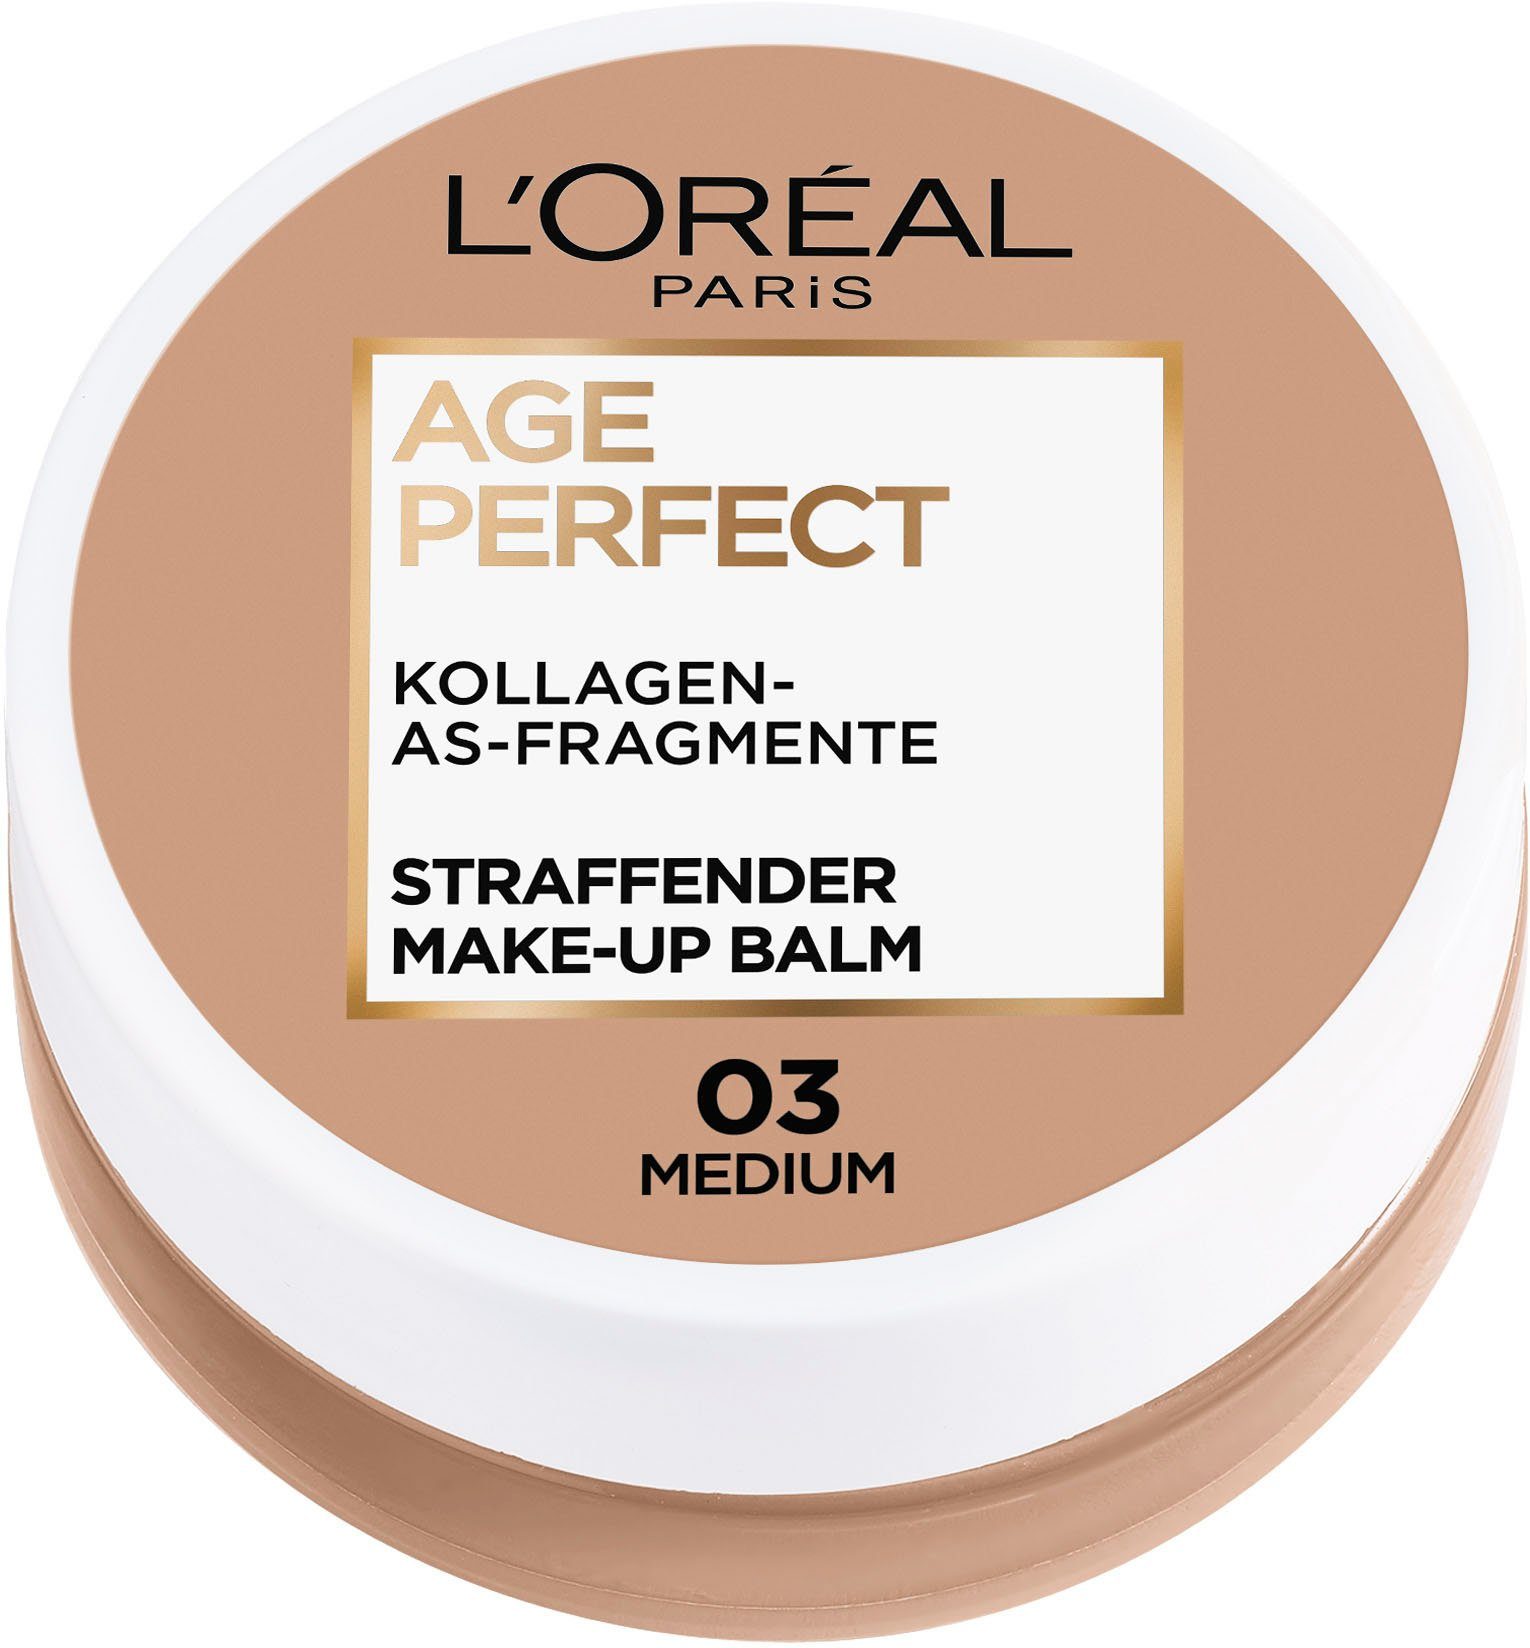 Balm Make-up Age Balm, Perfect Make-up L'ORÉAL PARIS Age Medium Perfect Foundation 03